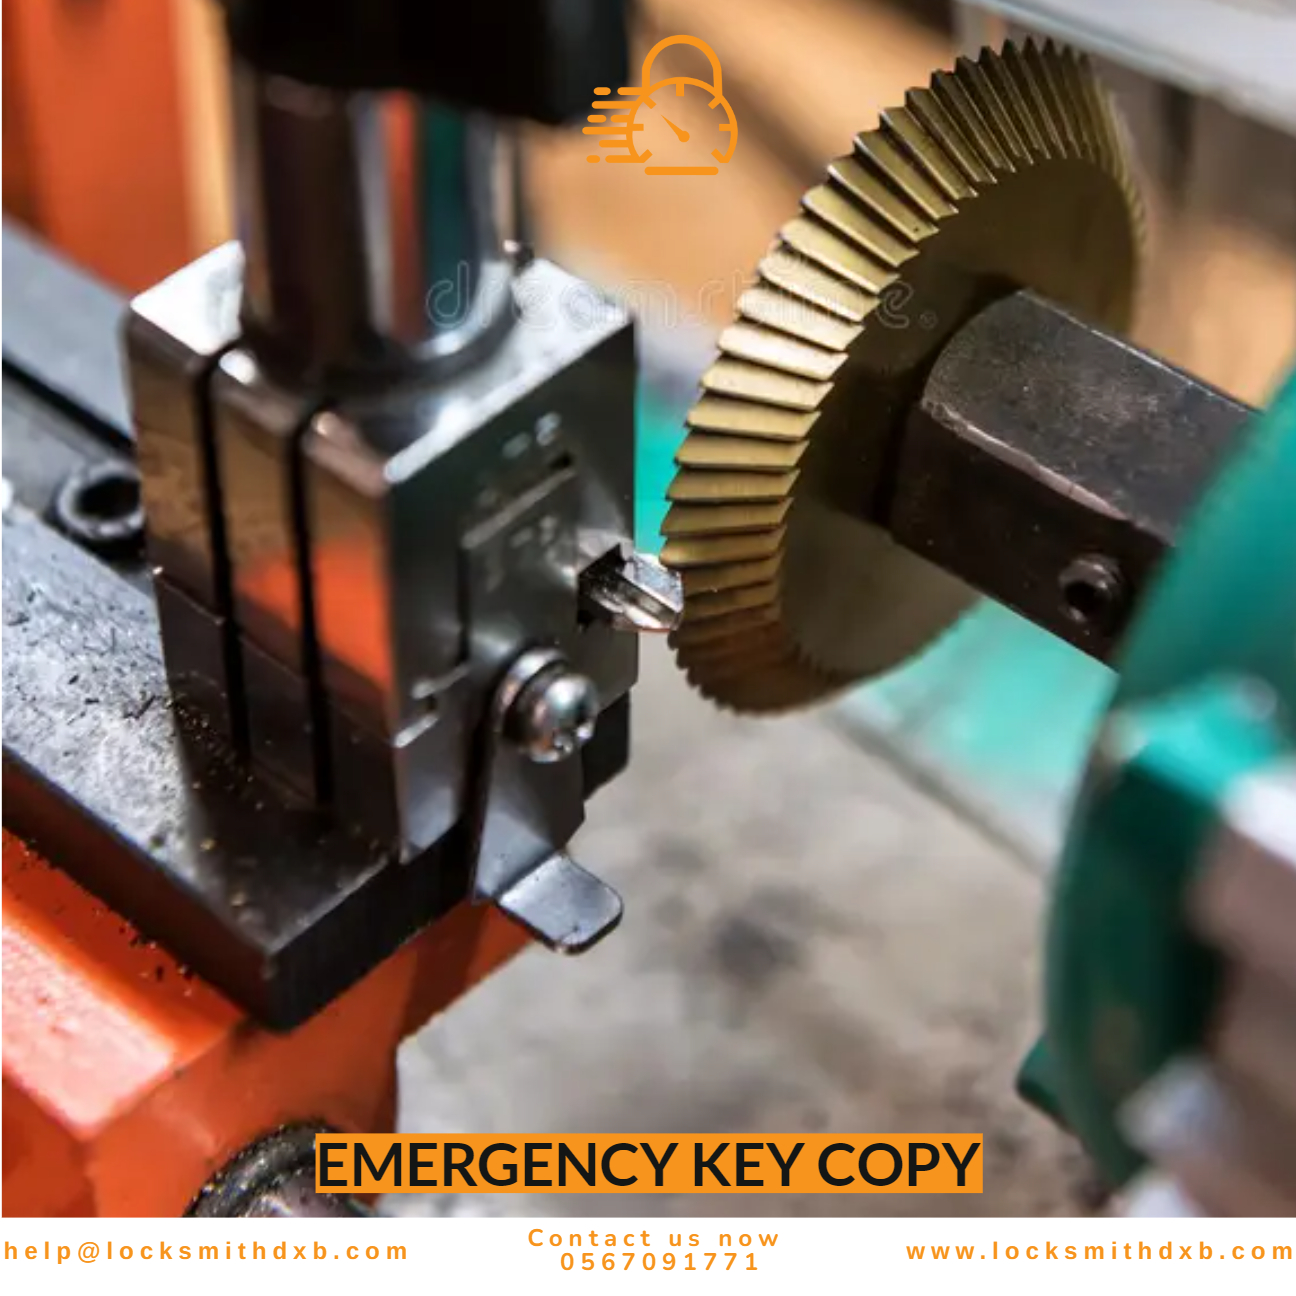 Emergency key copy